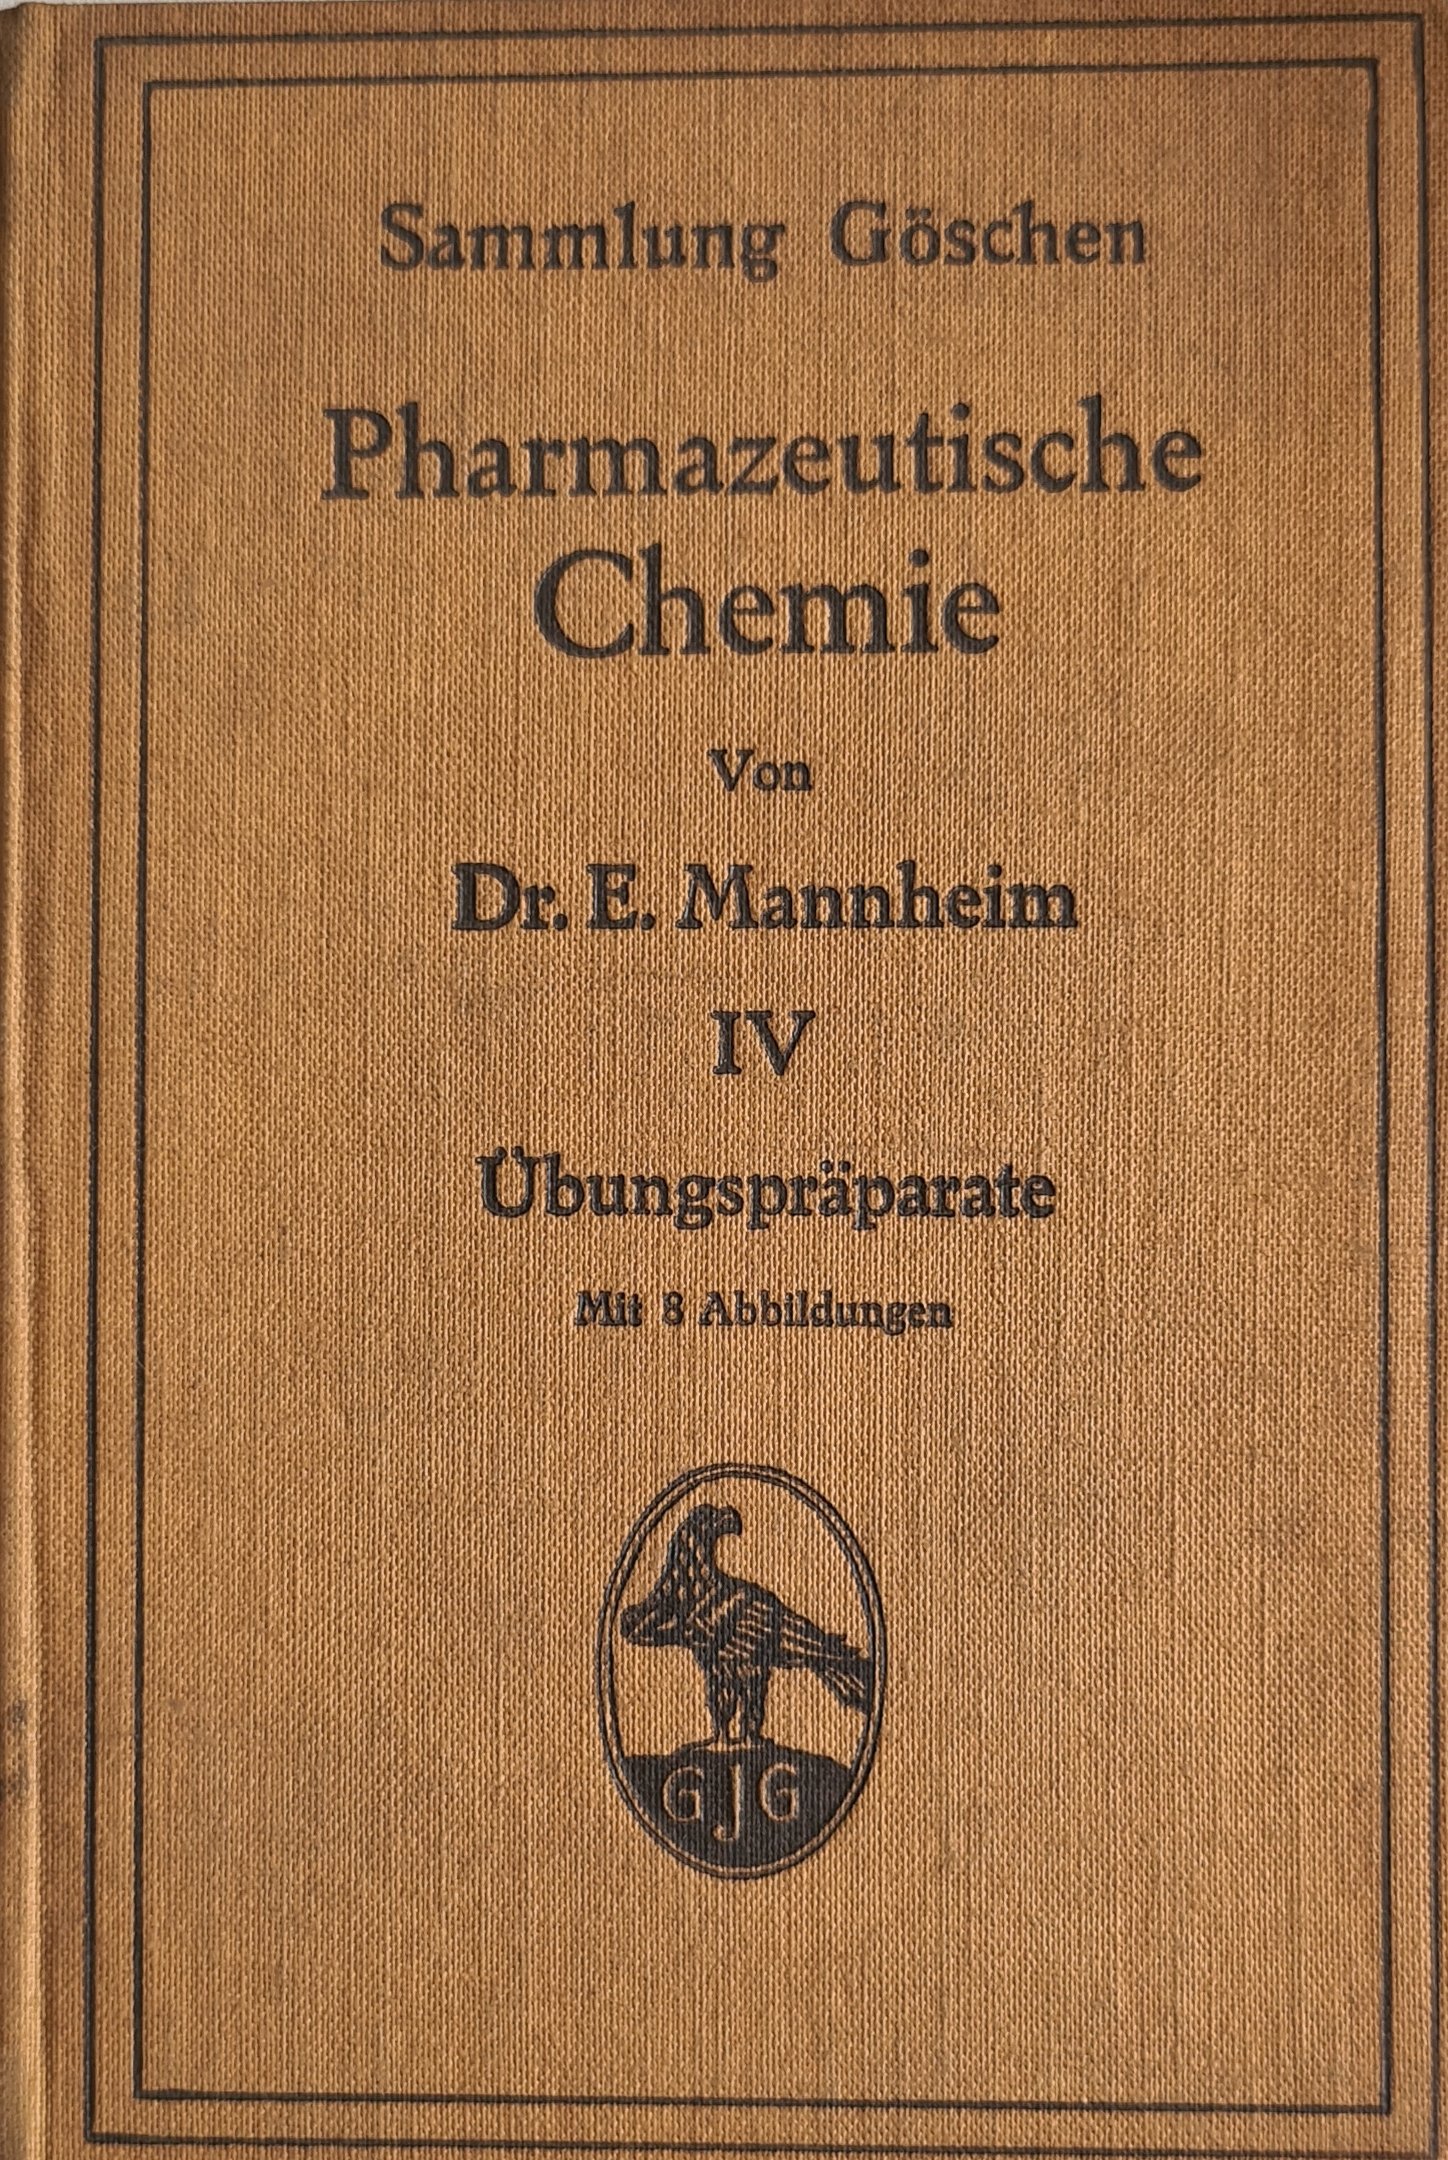 Pharmazeutische Chemie (Krankenhausmuseum Bielefeld e.V. CC BY-NC-SA)